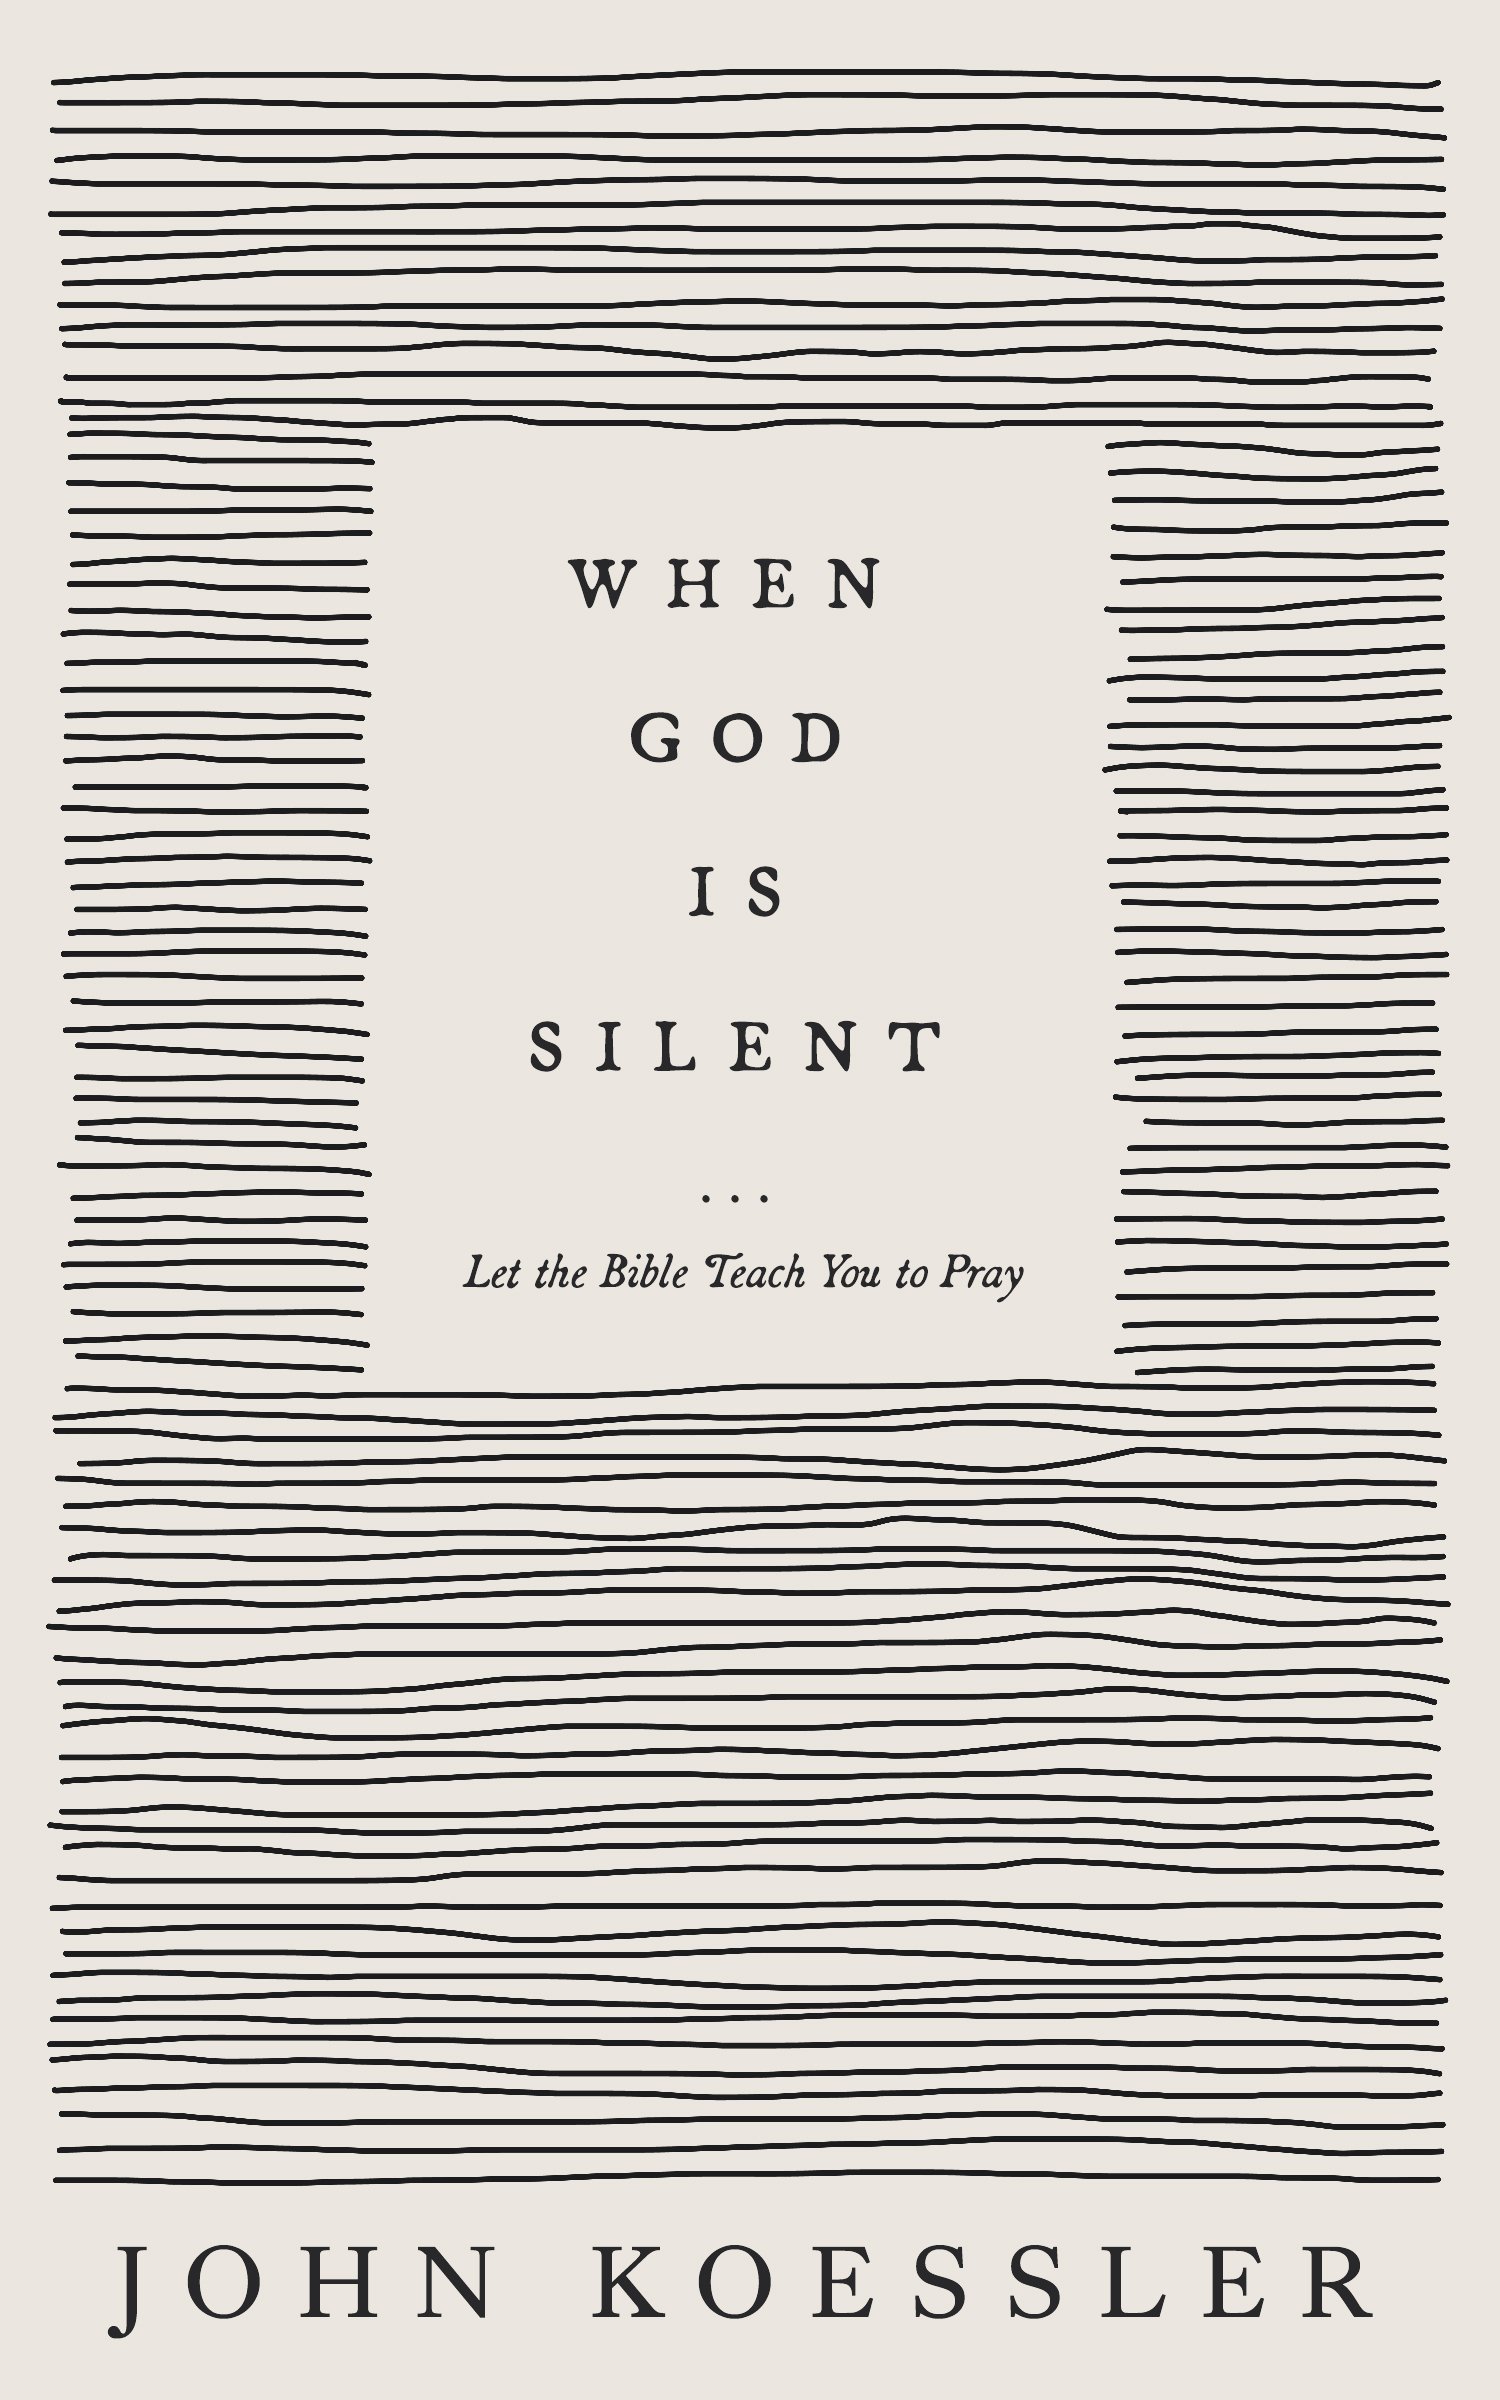 When God is Silent-Concept.jpg